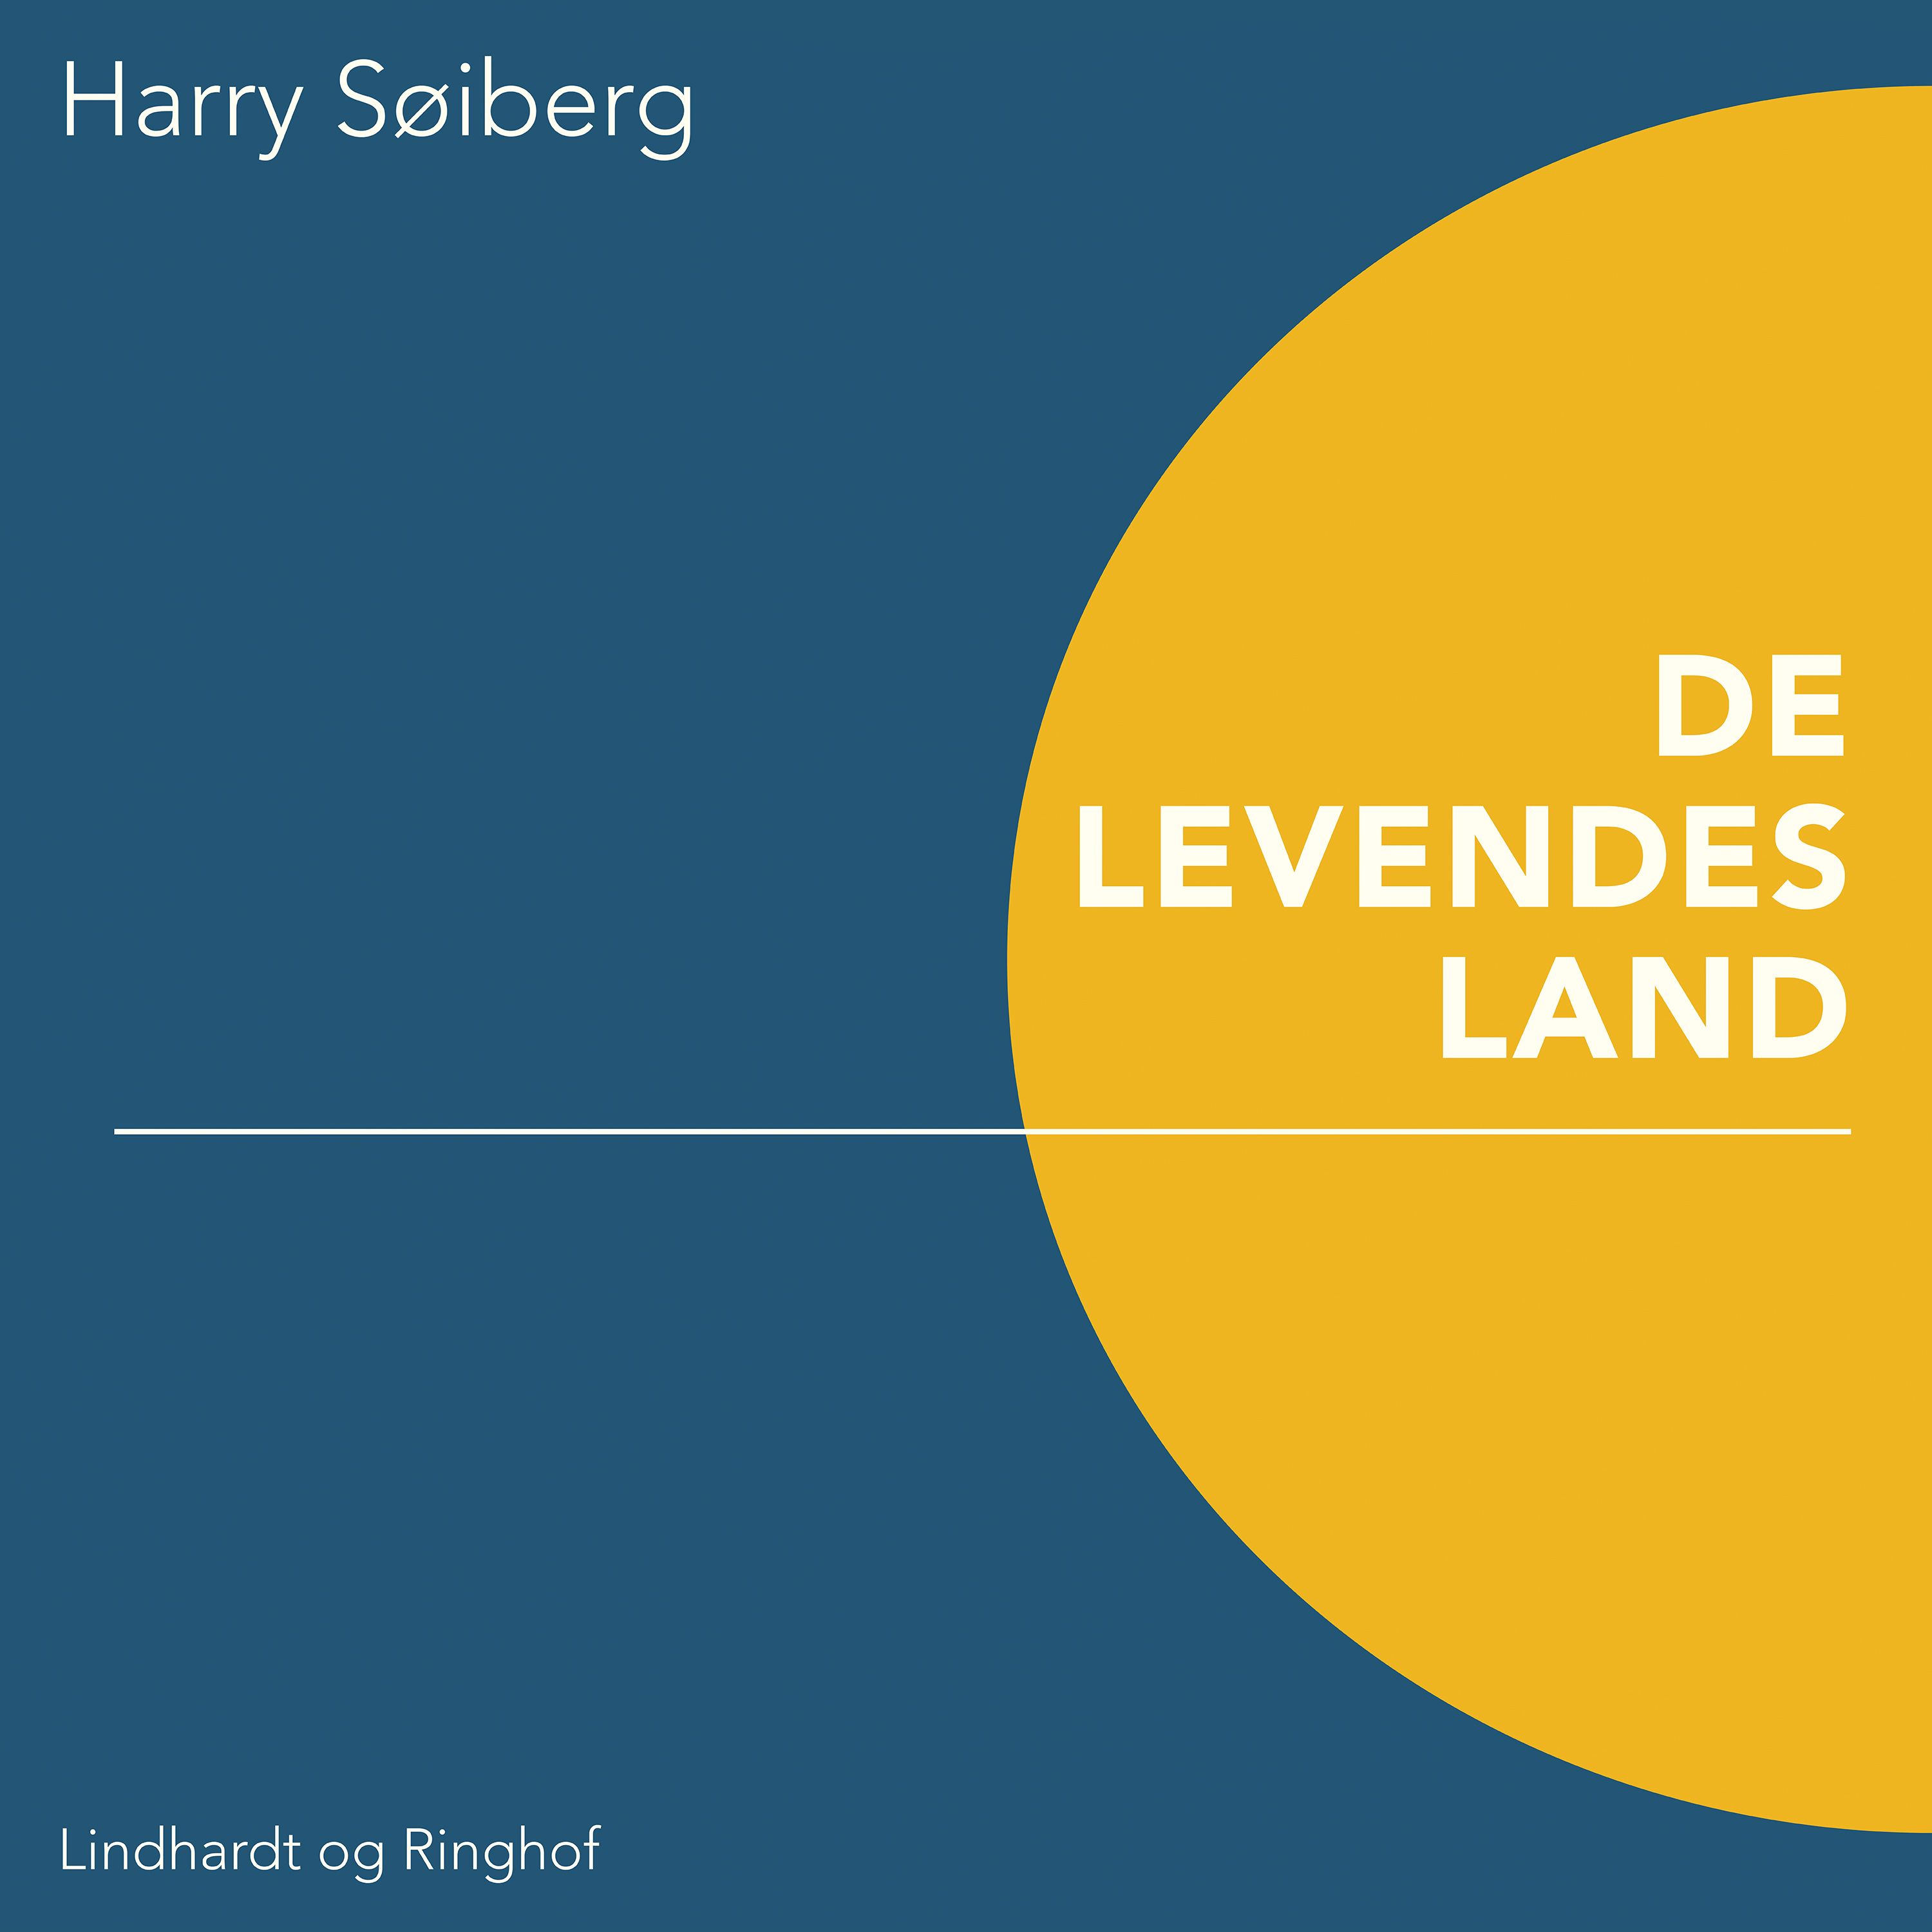 De levendes land, ljudbok av Harry Søiberg